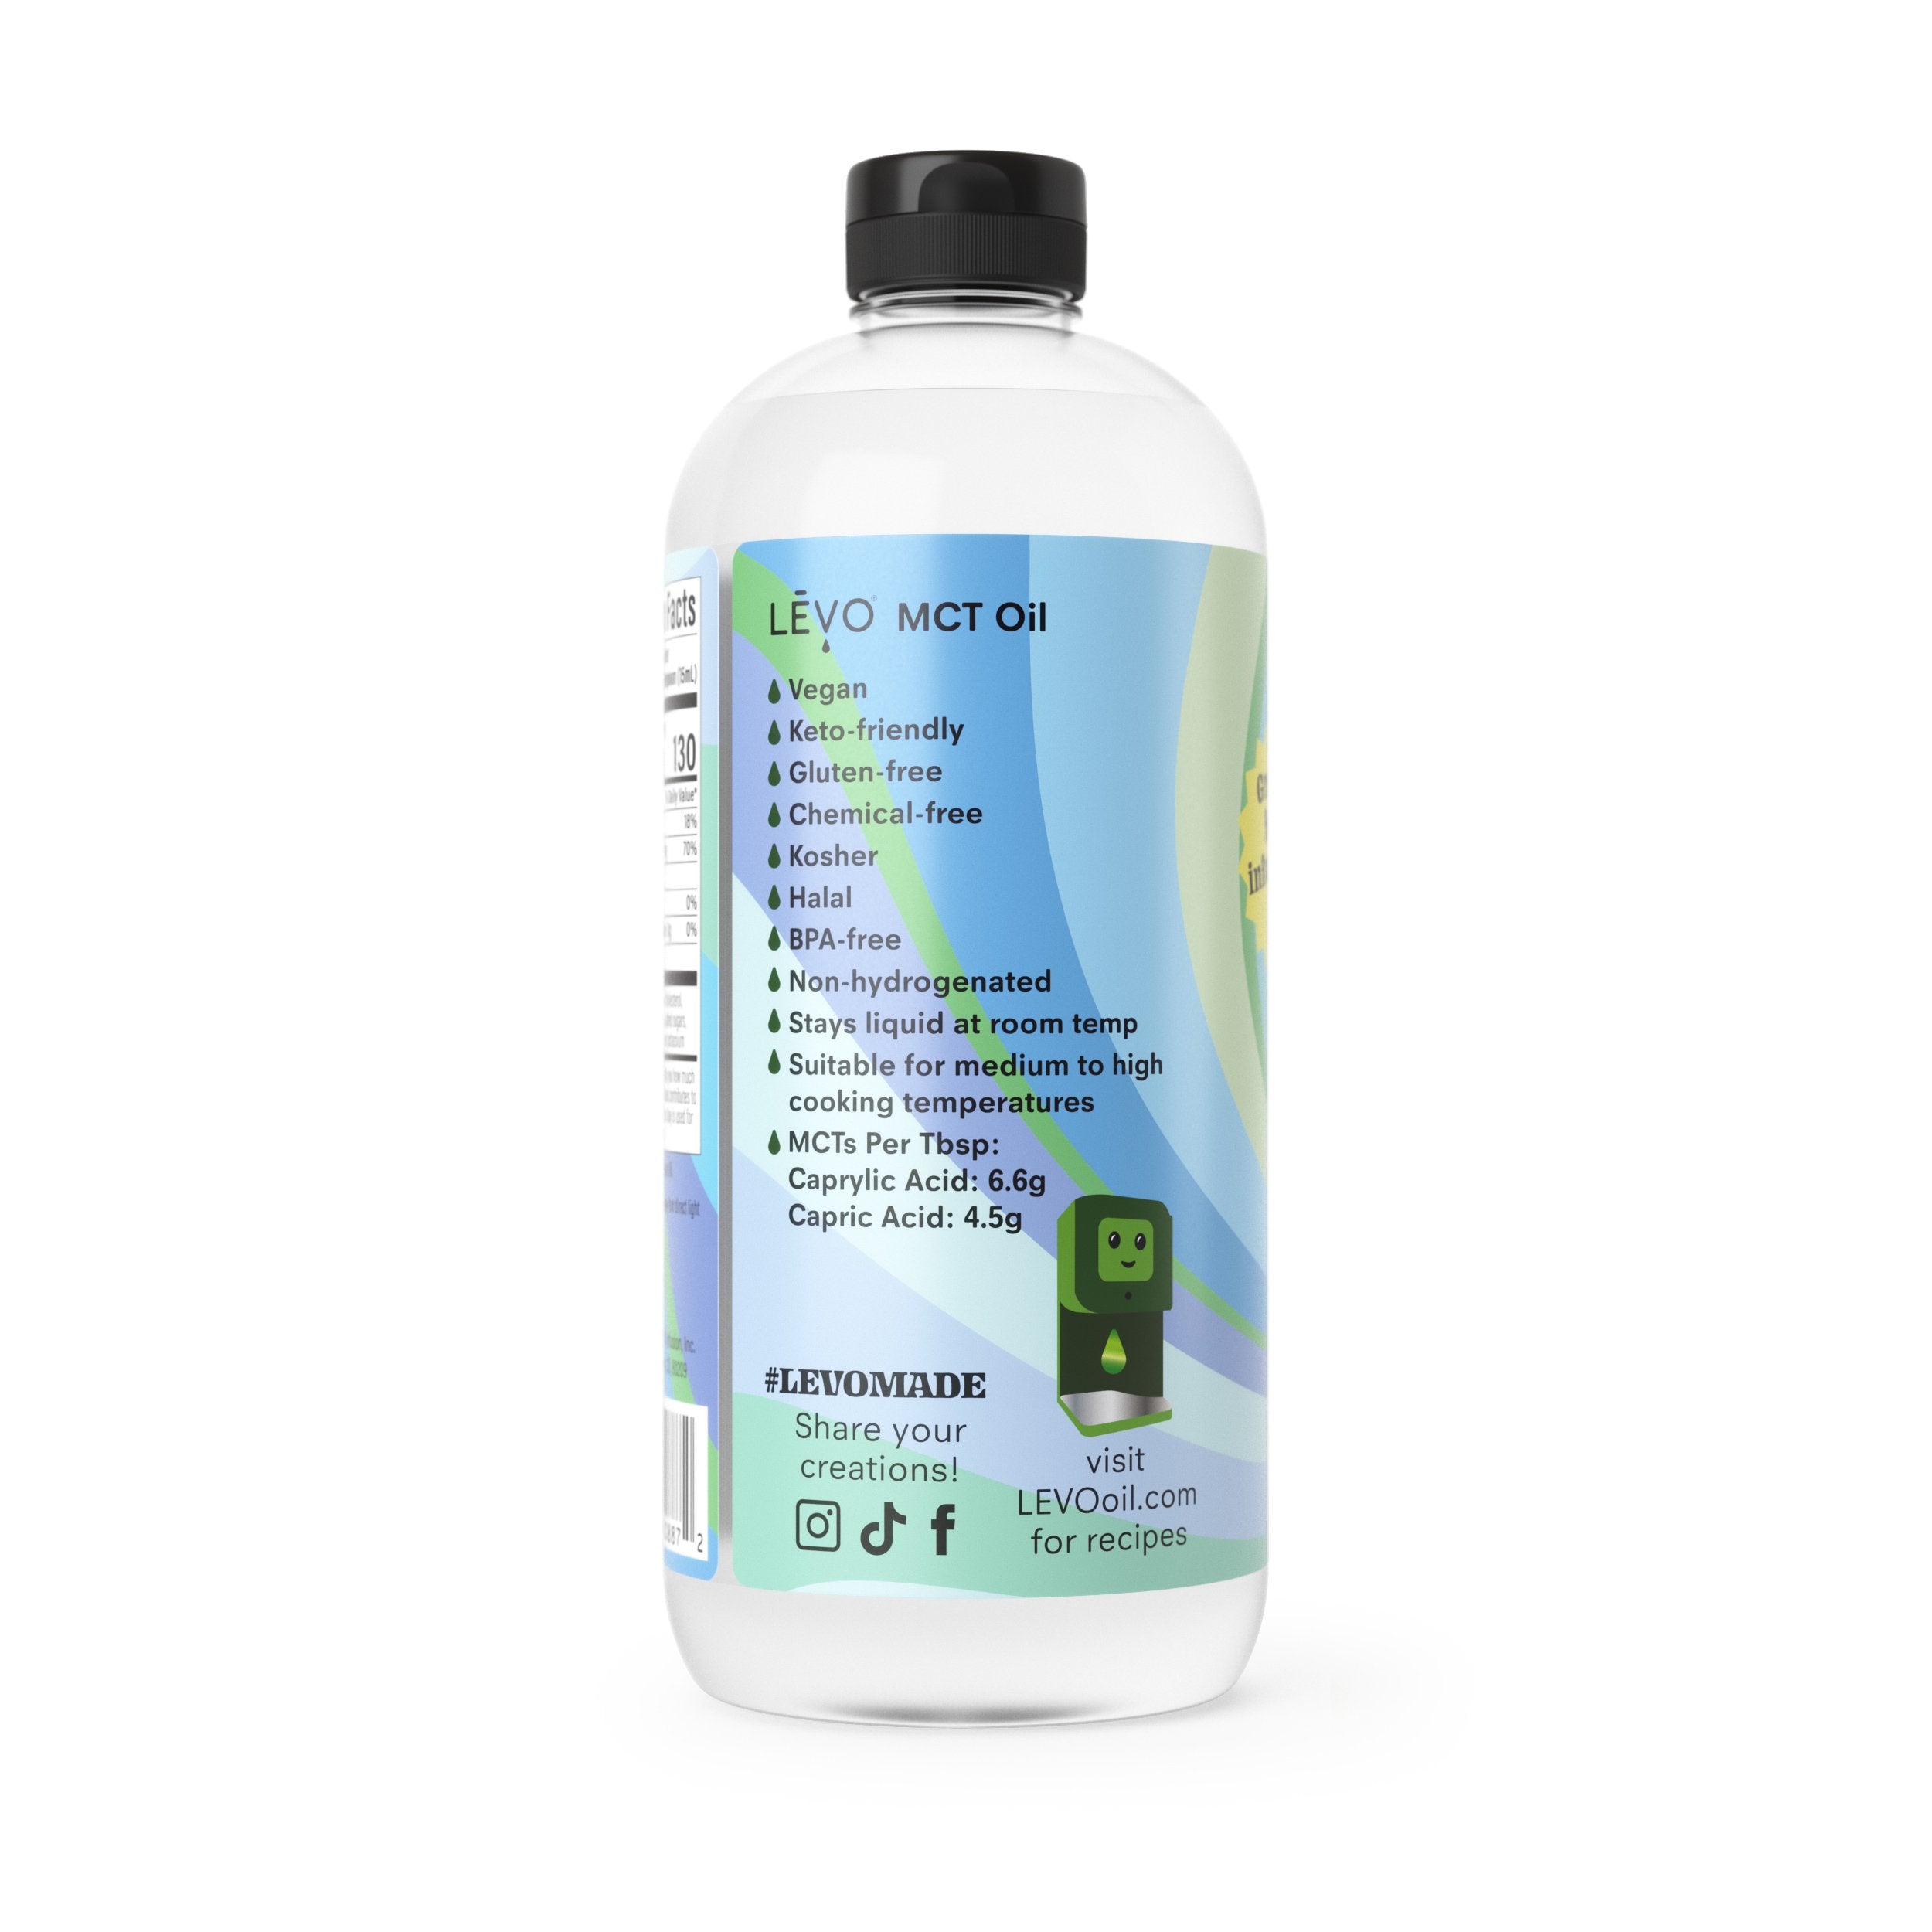 LEVO MCT Oil is vegan, keto-friendly, gluten-free, chemical-free, kosher, halal, BPA-free, and non-hydrogenated. 